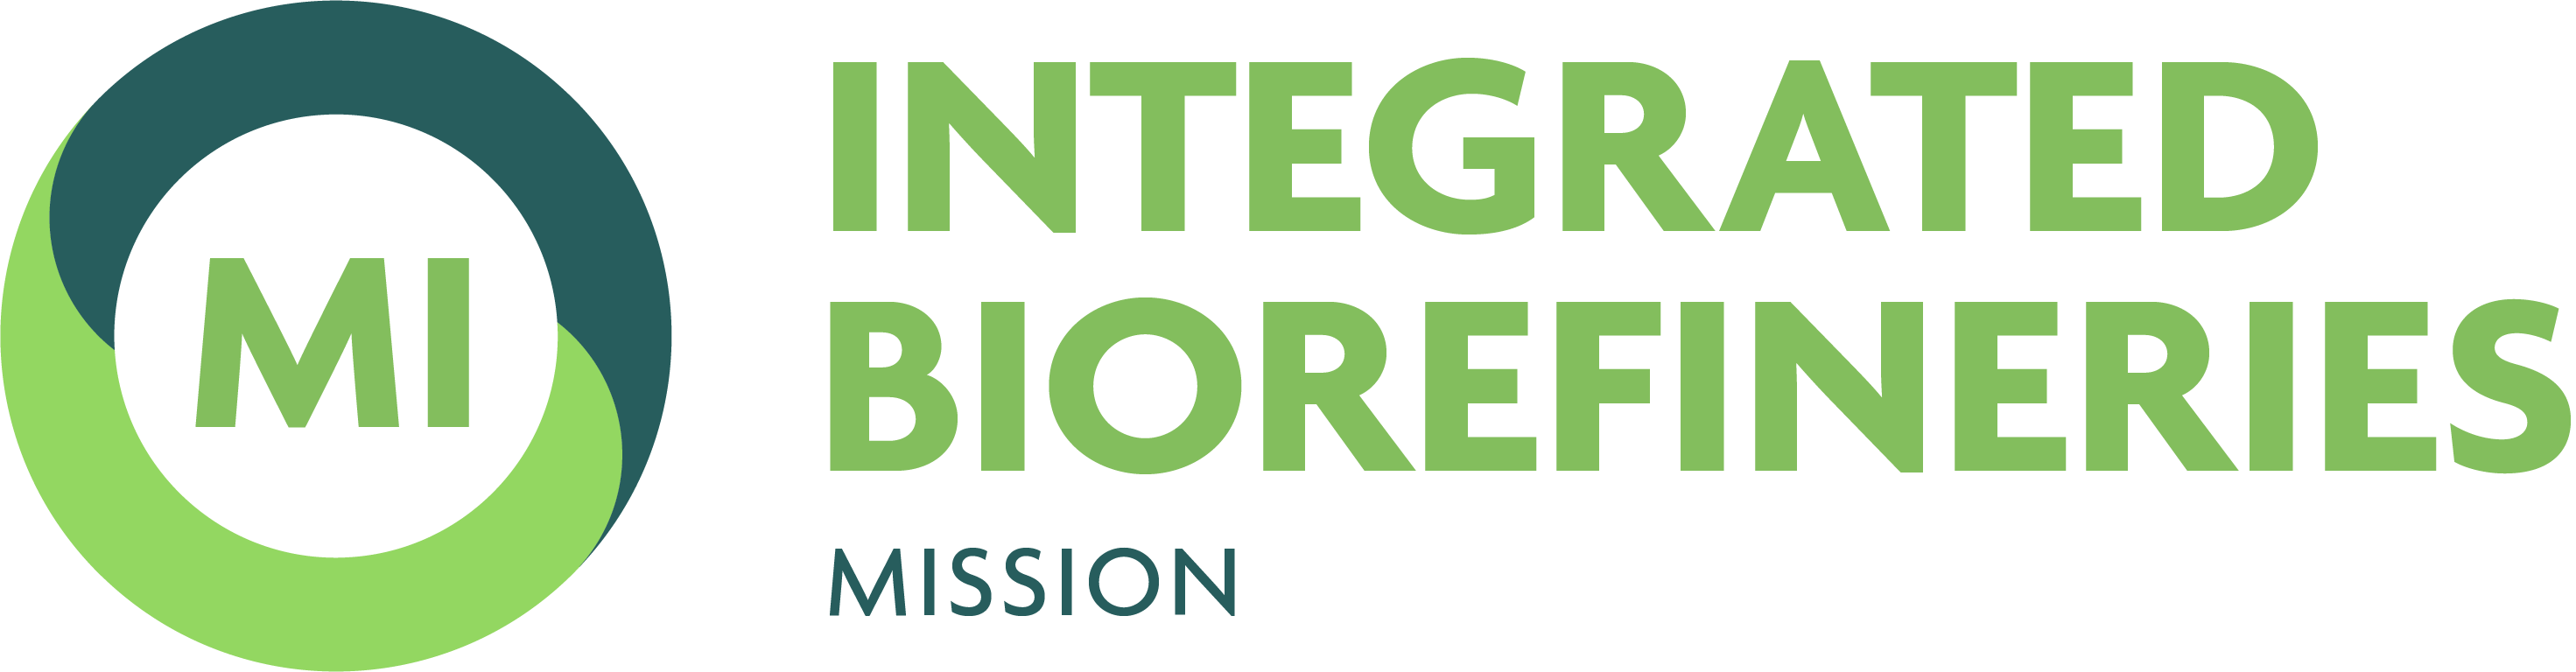 Integrated Biorefineries logo